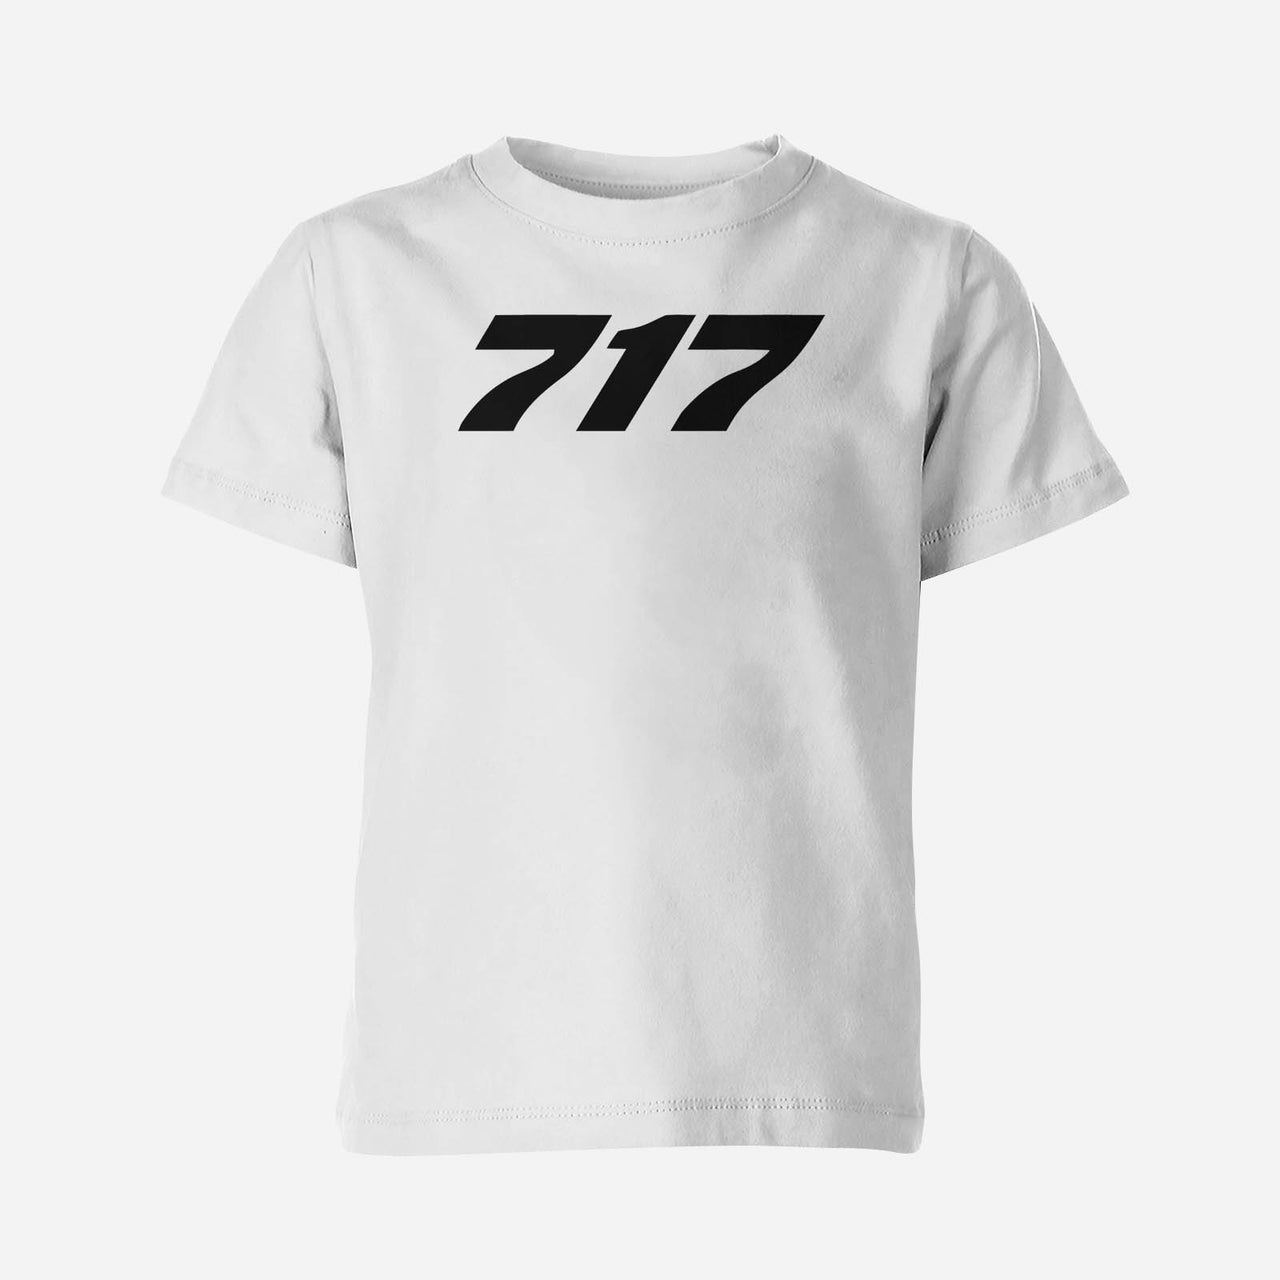 717 Flat Text Designed Children T-Shirts